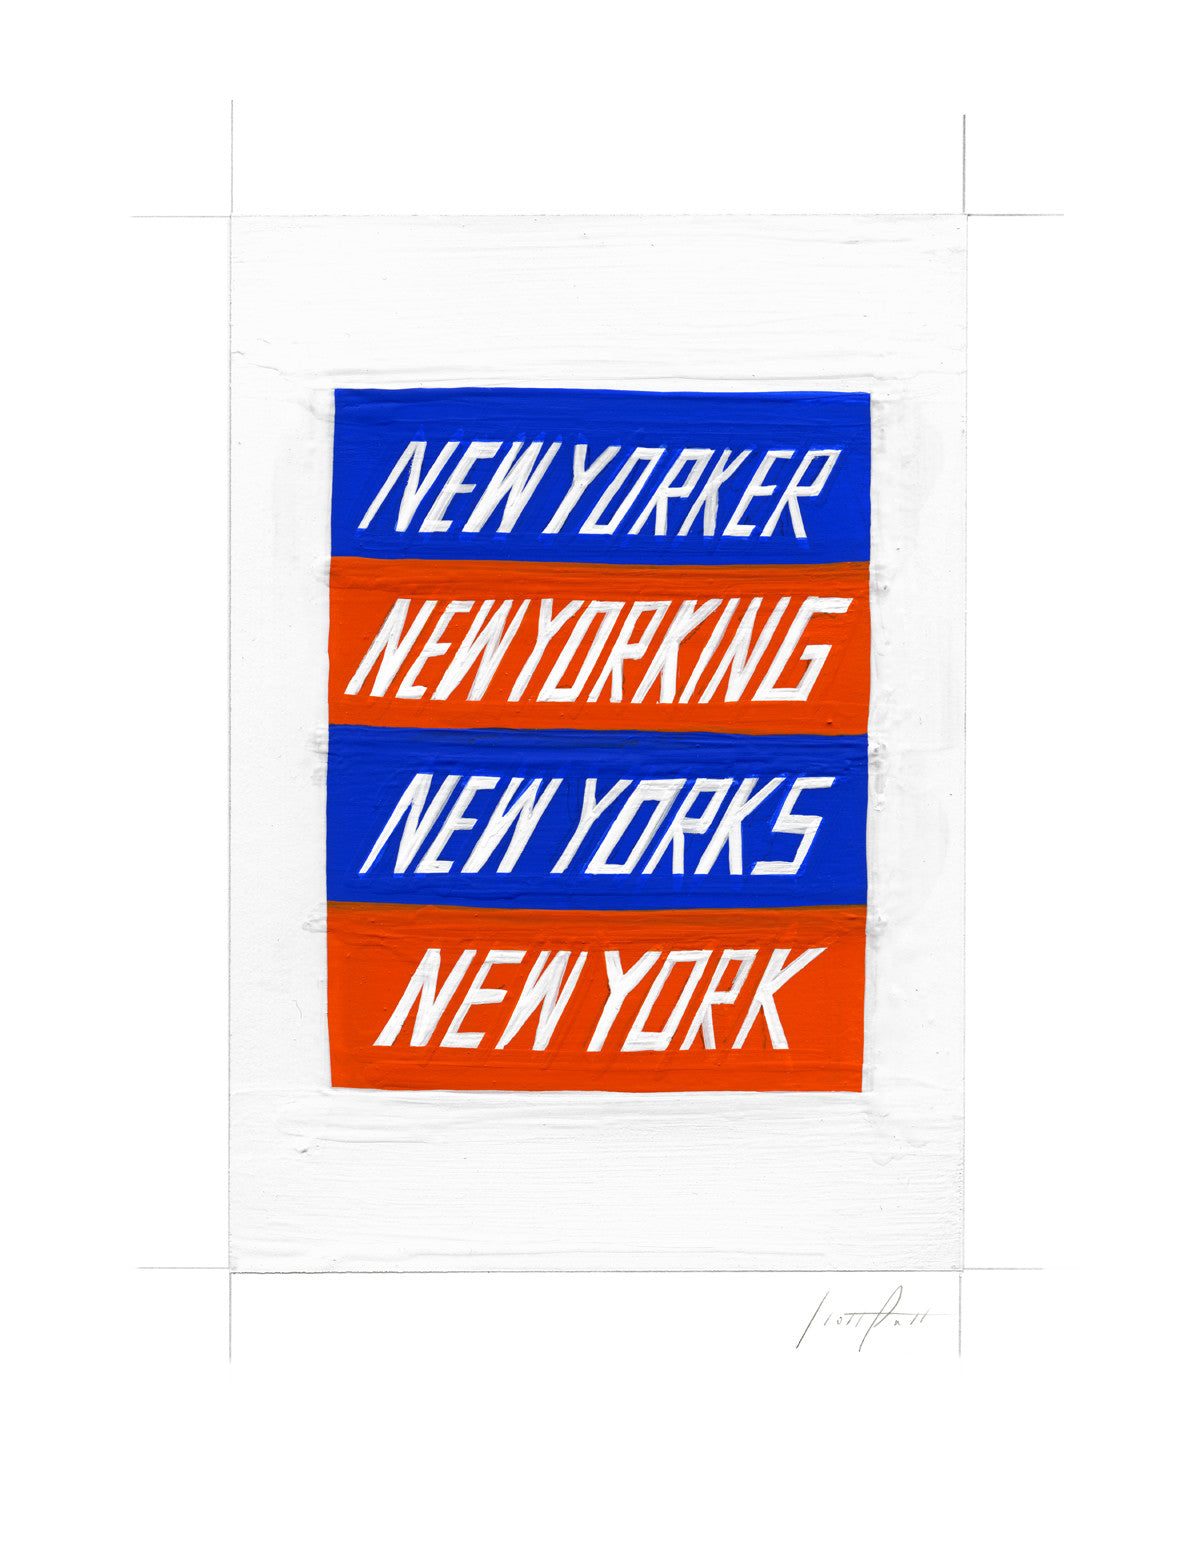 #255 NEW YORKING (BLUE AND ORANGE)